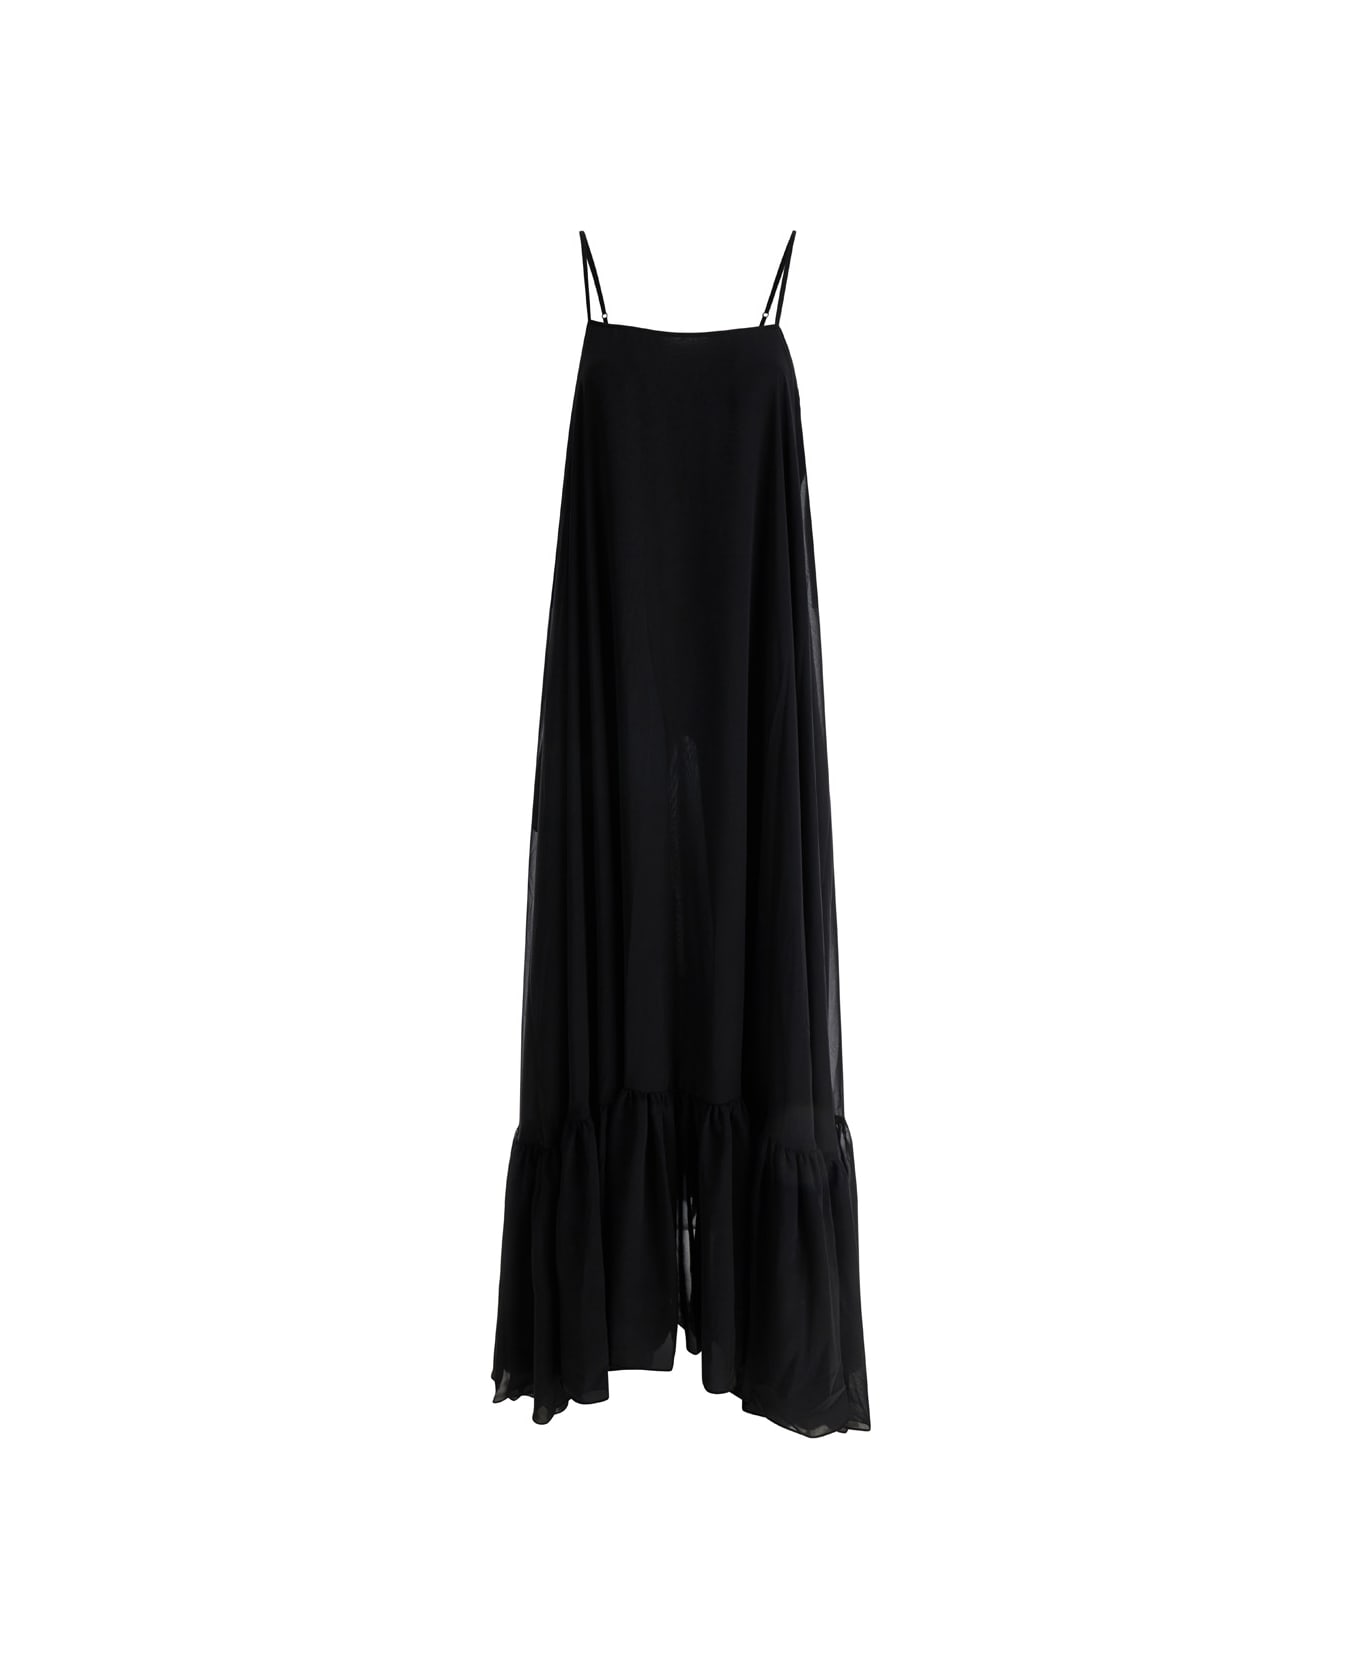 Rotate by Birger Christensen Black Wide Maxi Dress In Chiffon Woman - Black